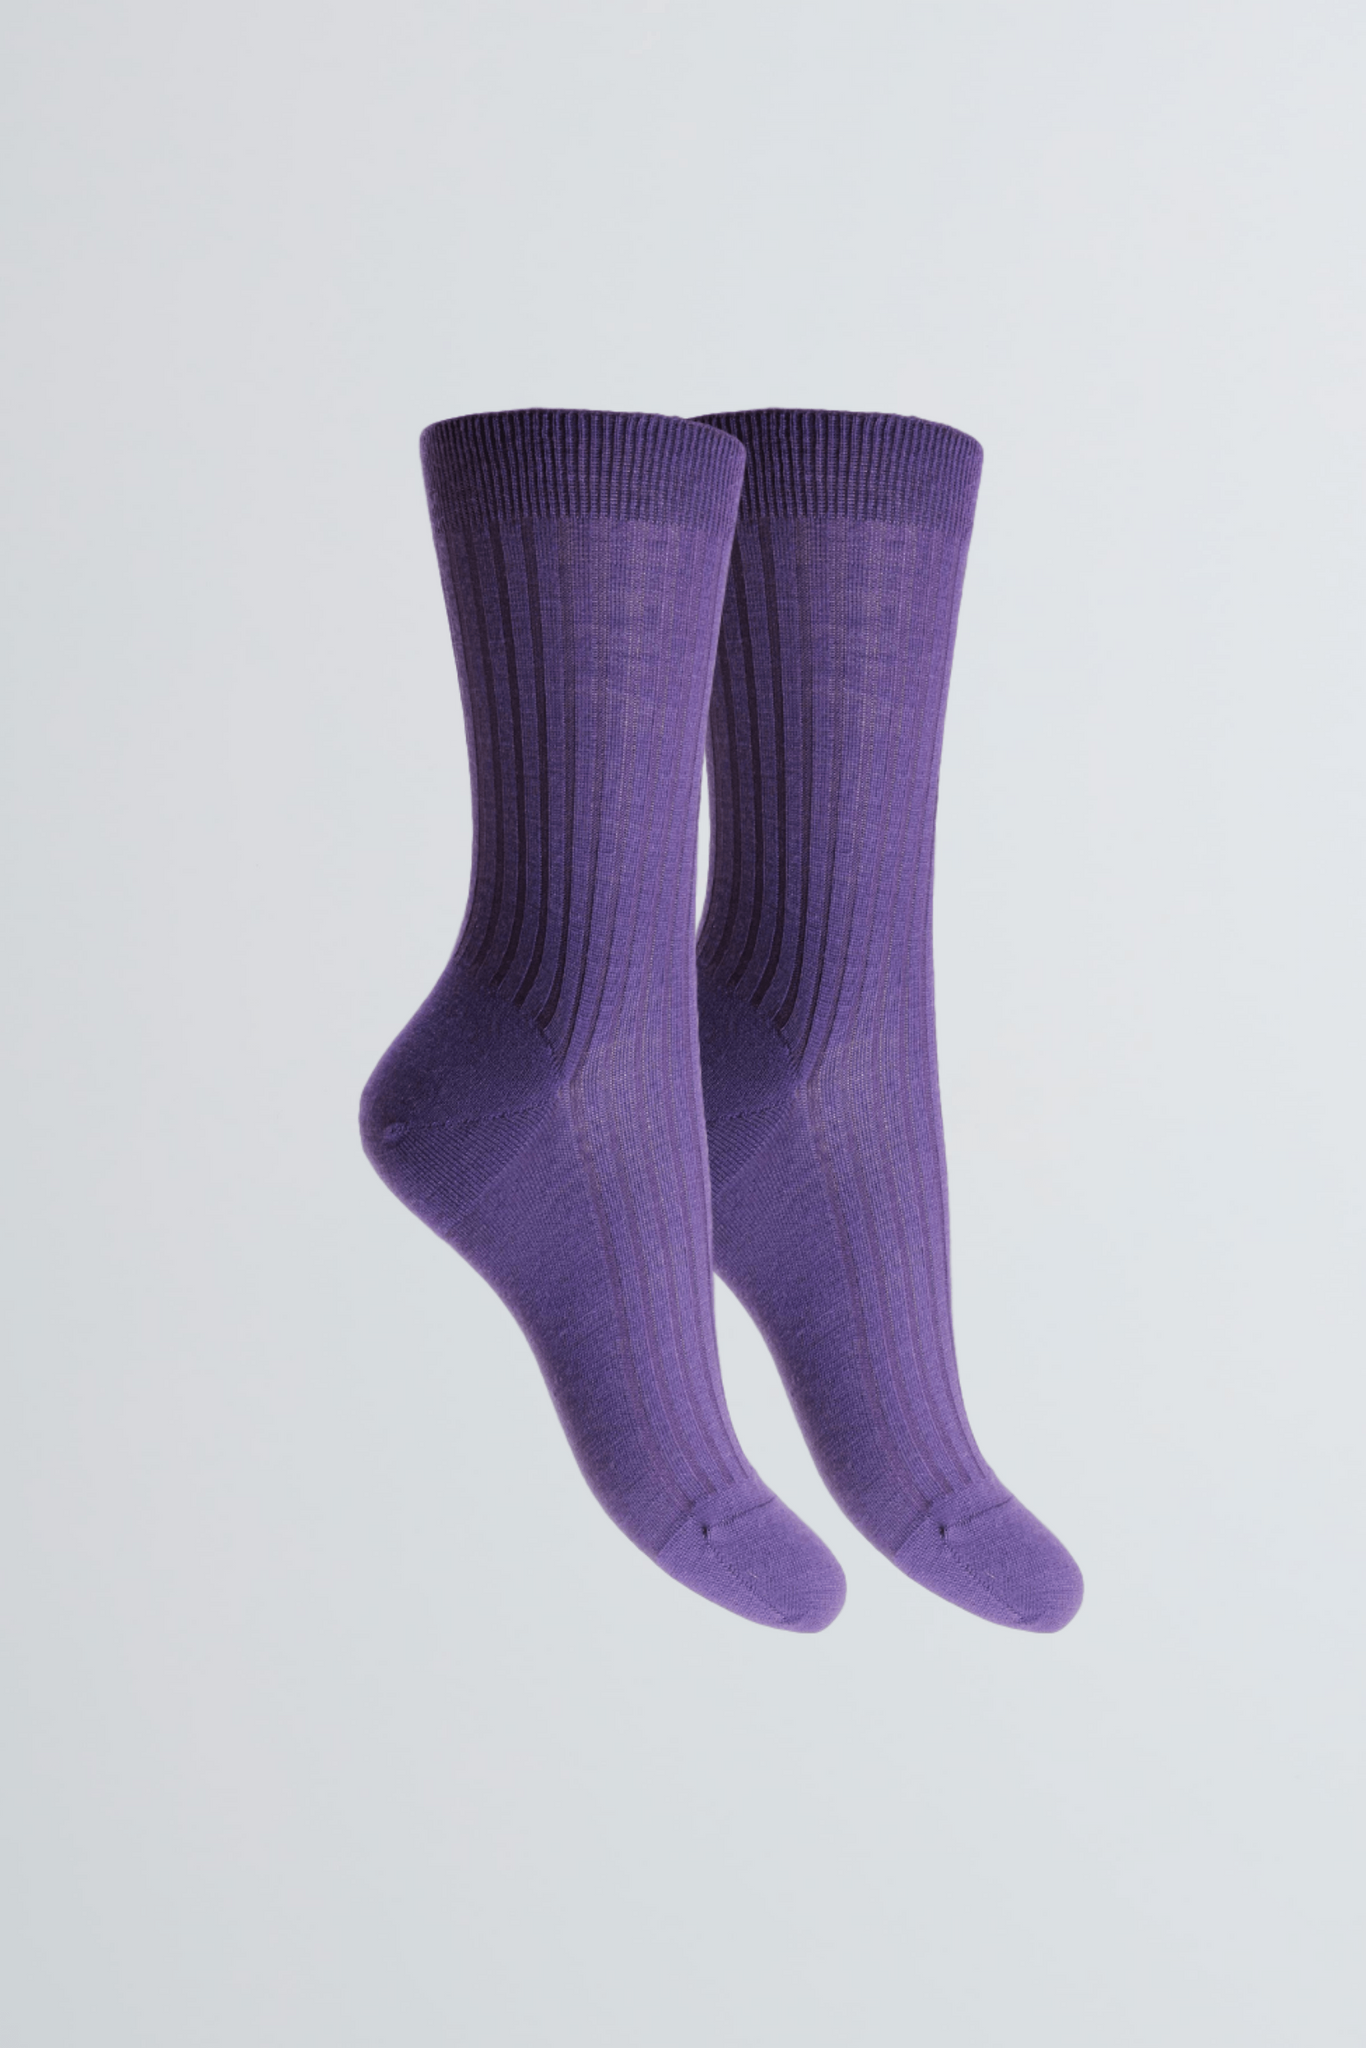 Womens Merino Wool Socks - Womens Purple Merino Wool Socks - Soft Wool Socks - Comfortable Merino Wool Socks - Sustainable Lavender Hill Clothing